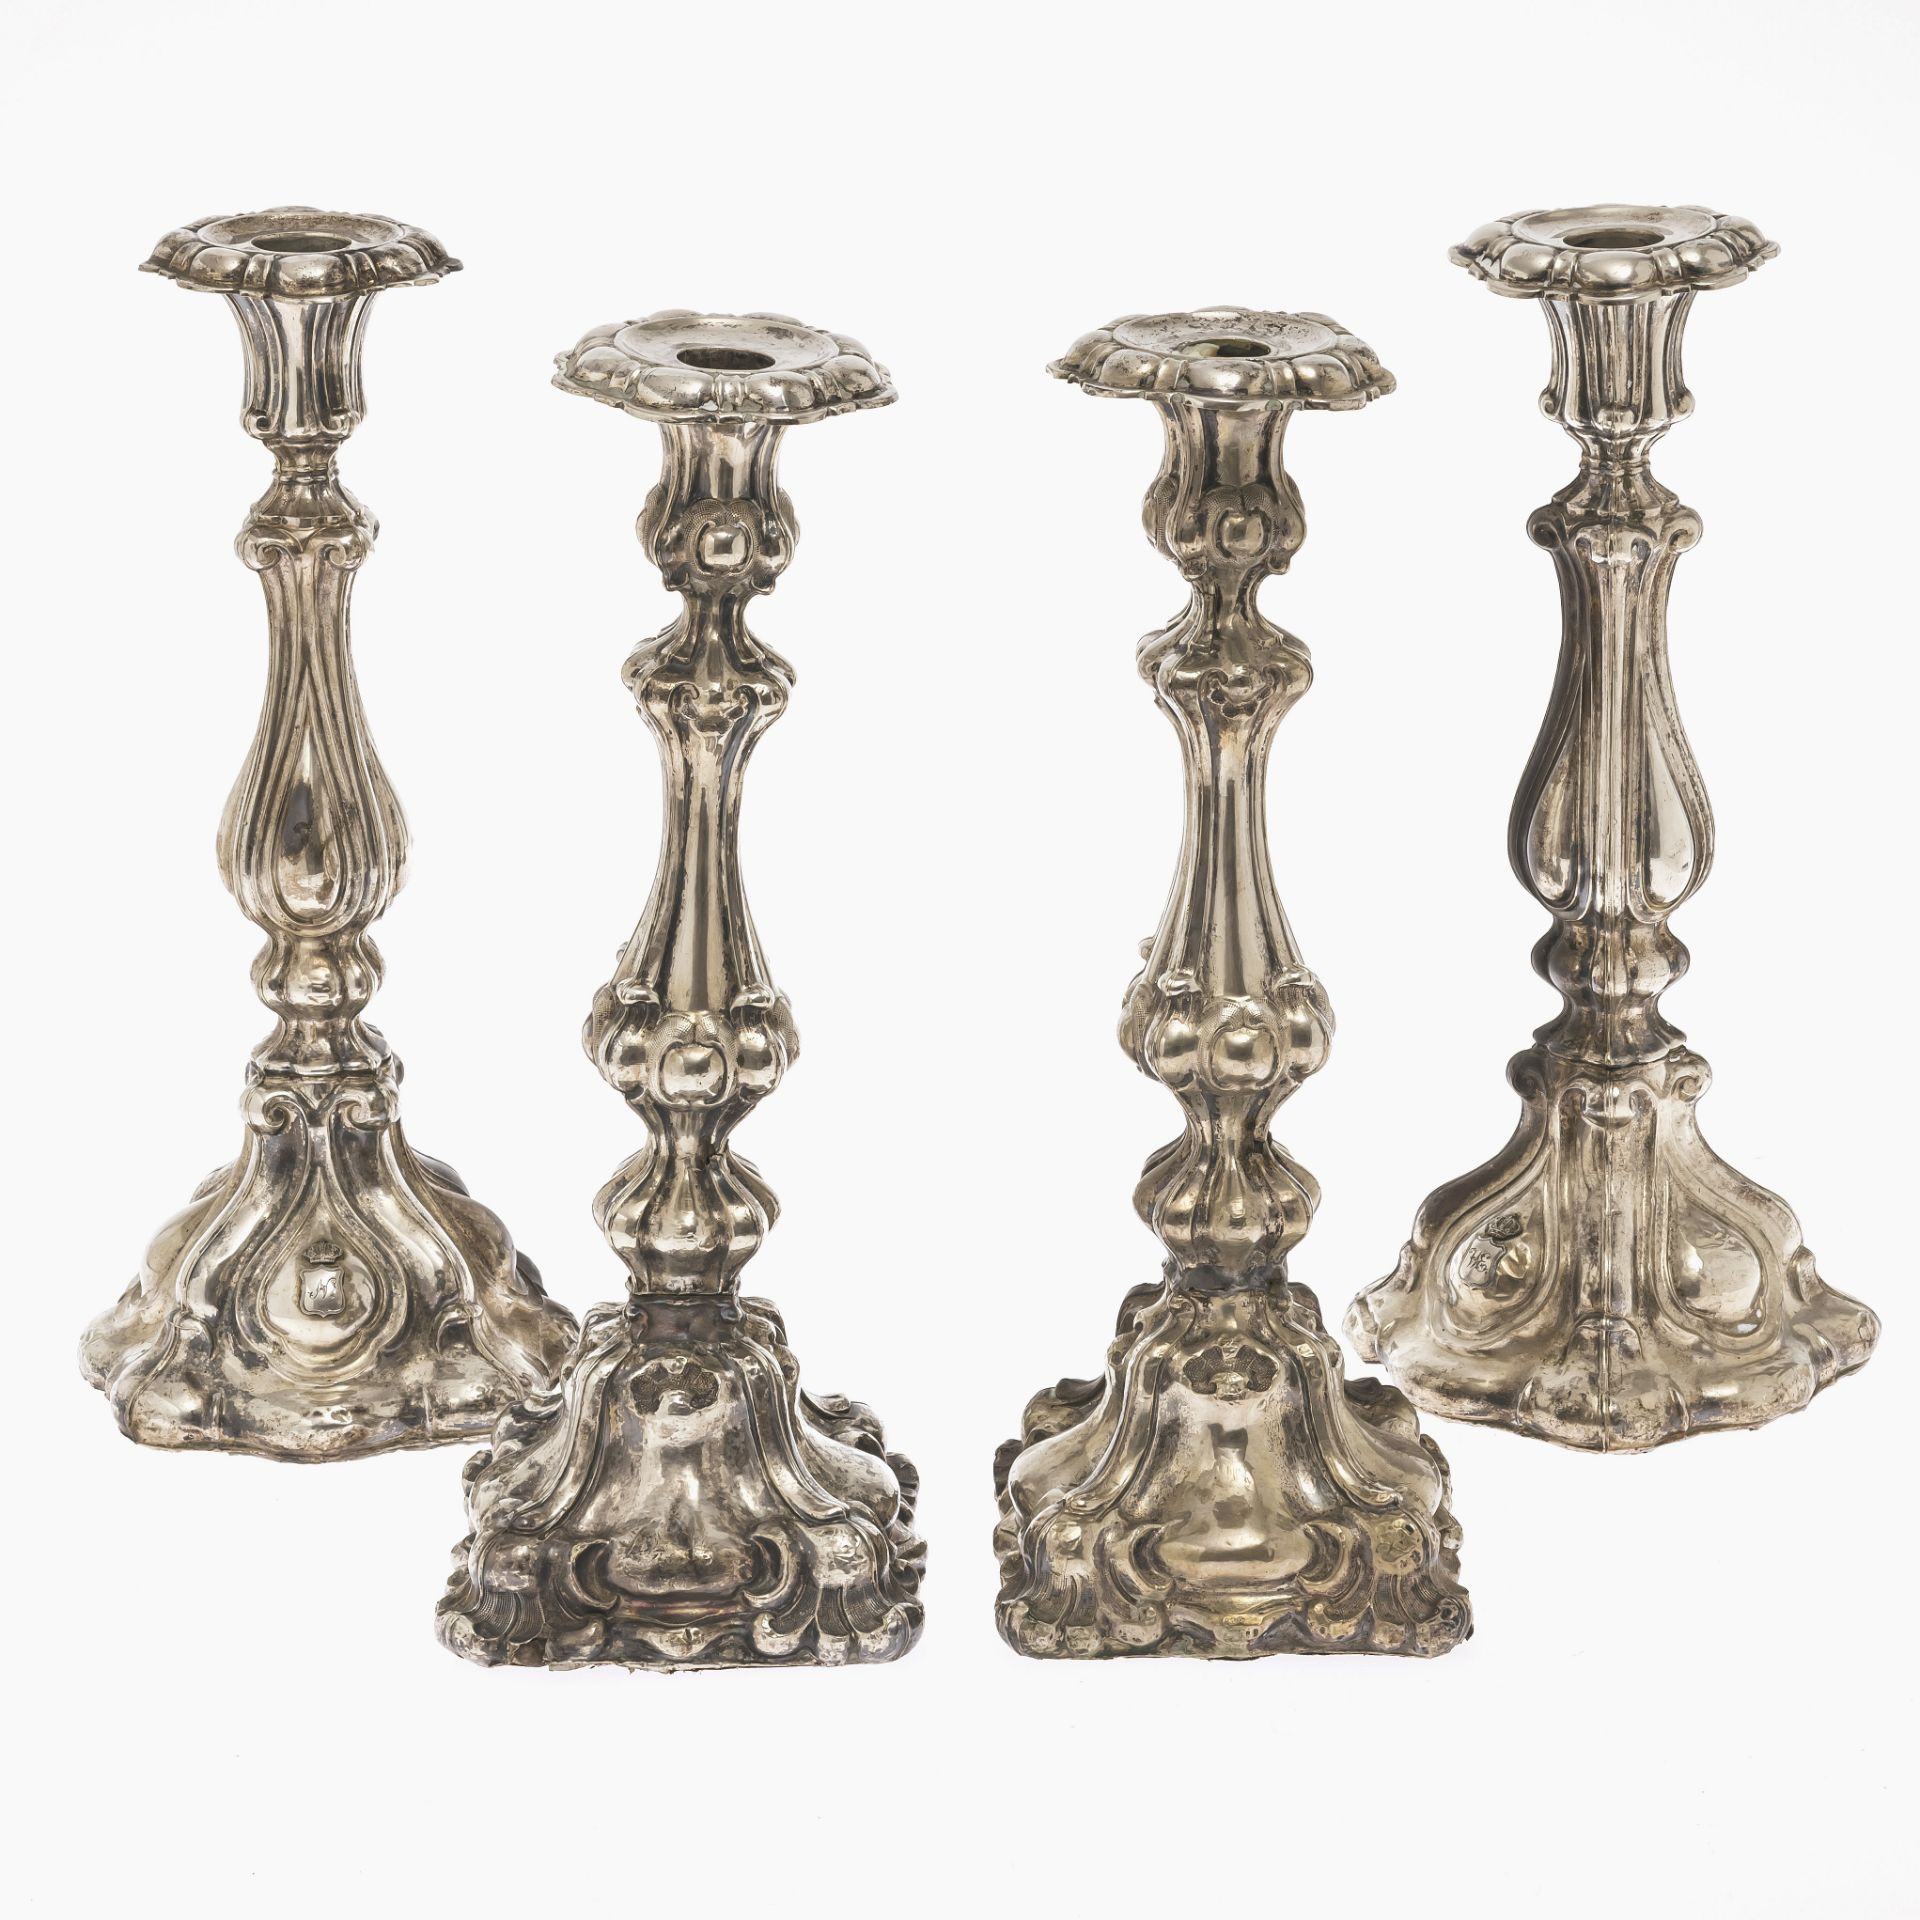 Four candlesticks - 19th century